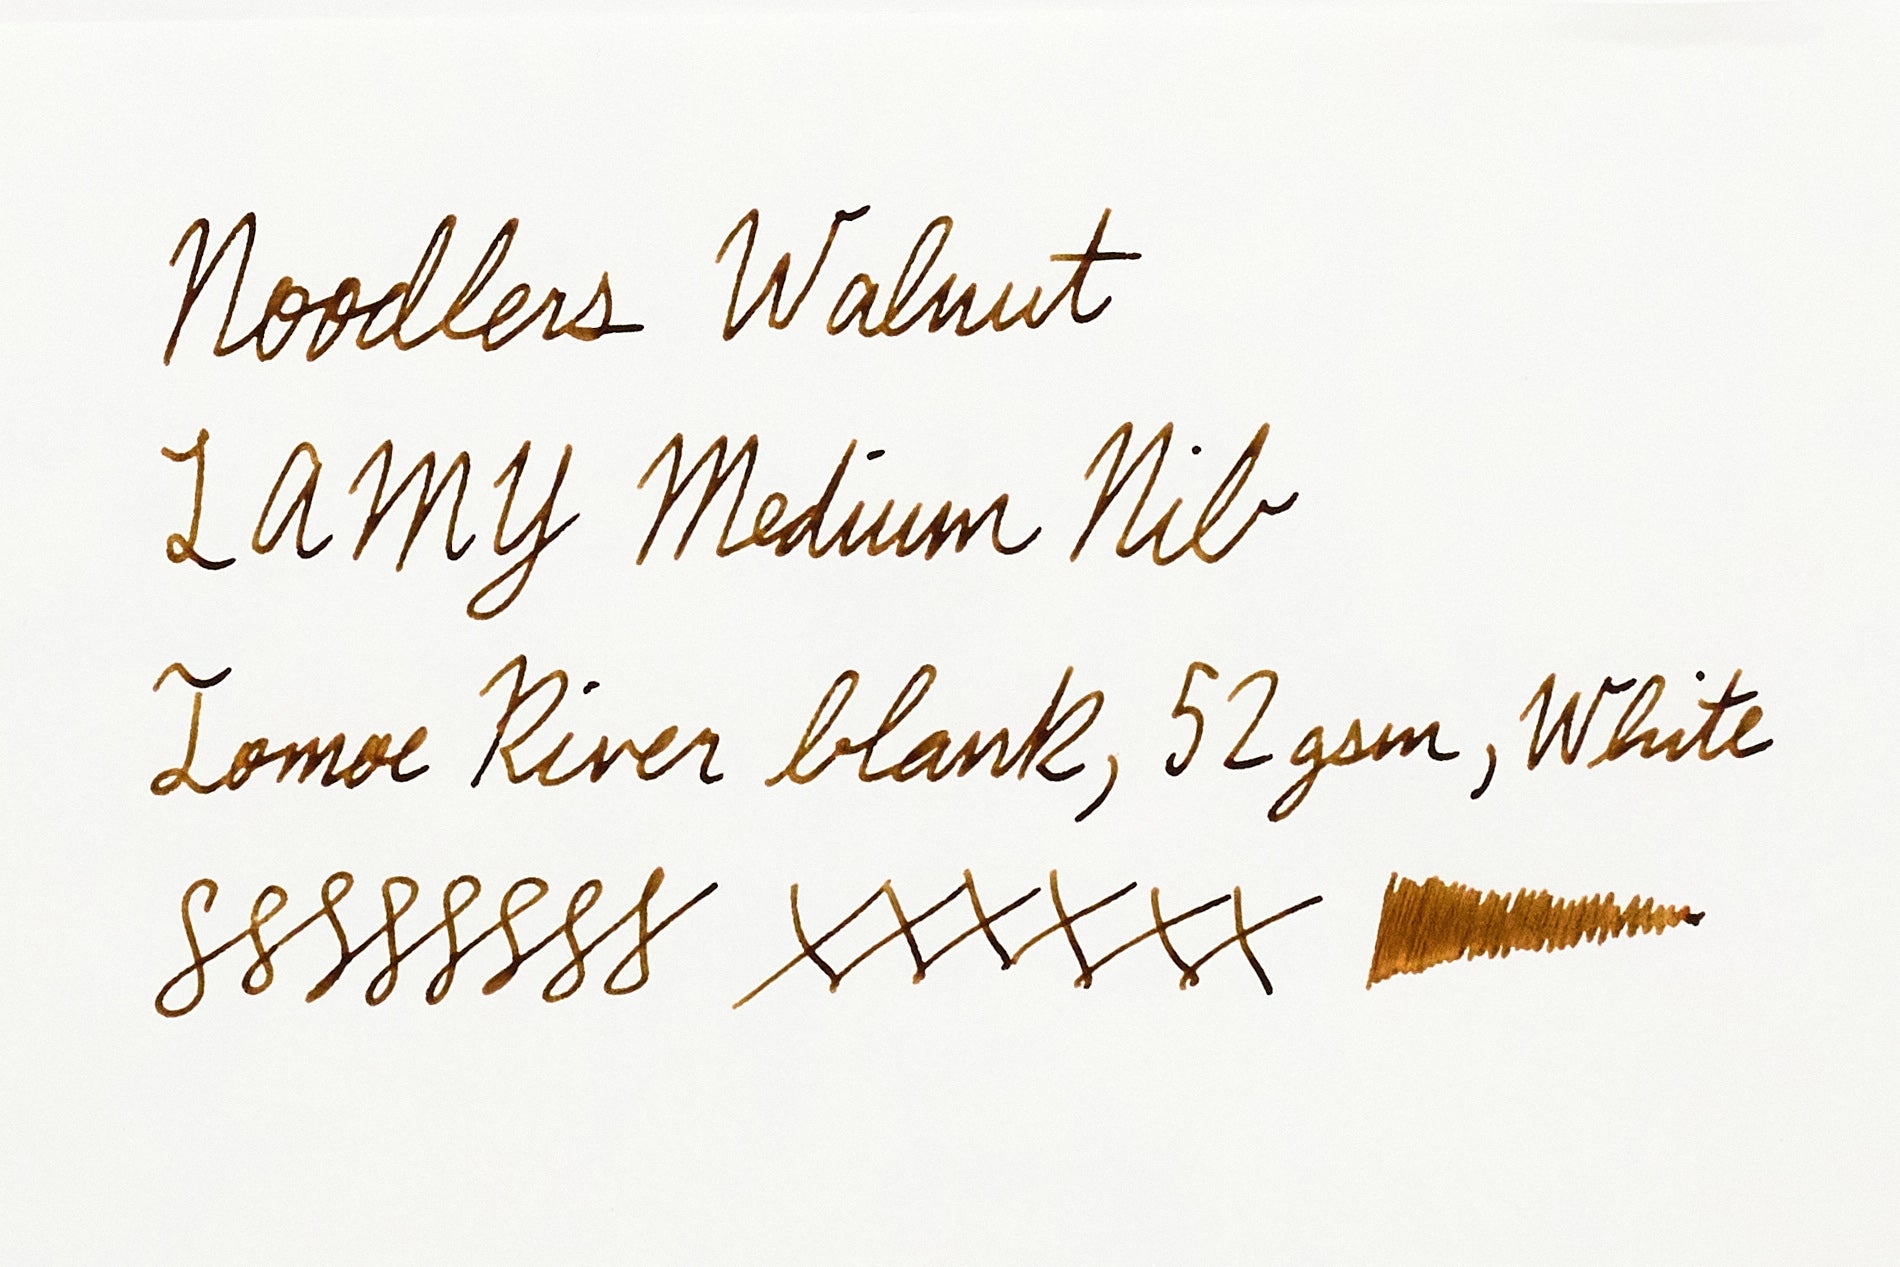 Noodler's Walnut Fountain Pen Ink writing sample on Tomoe River blank paper